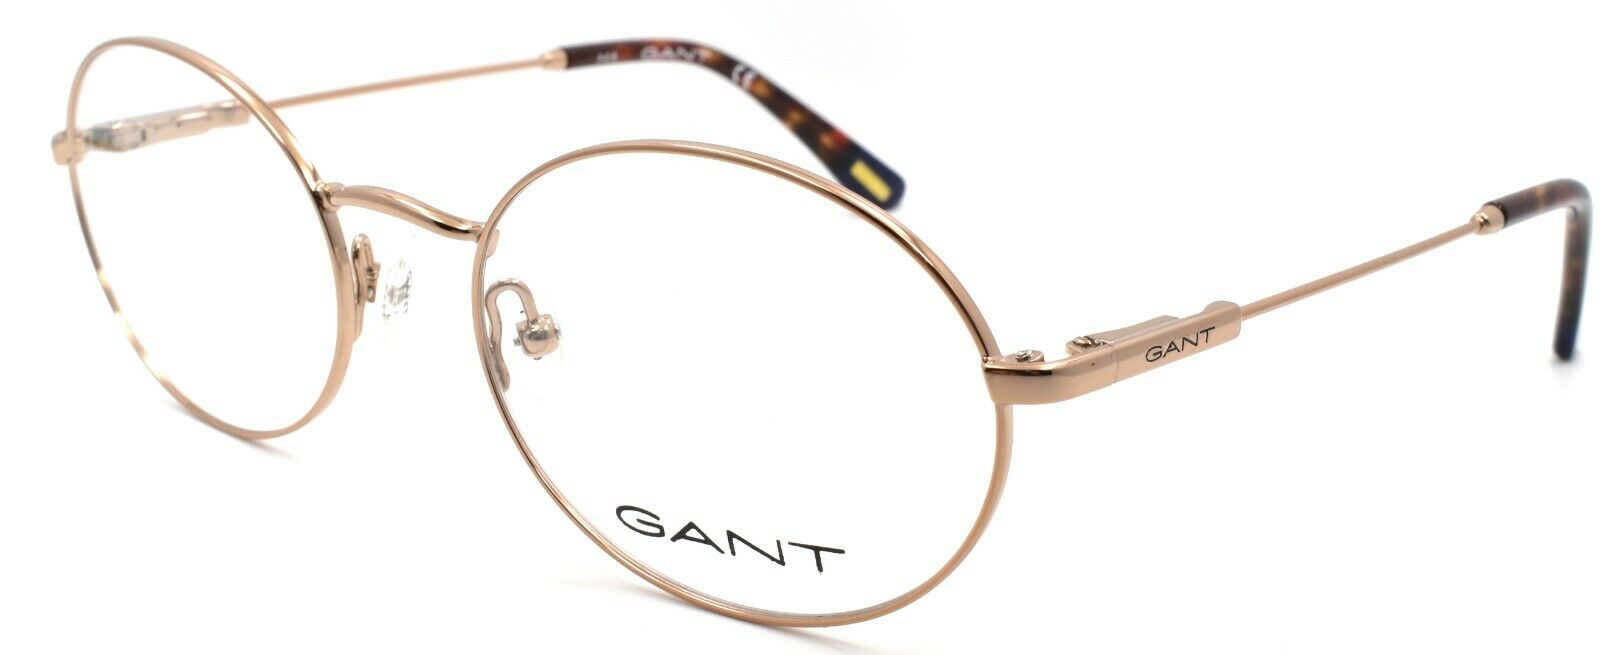 1-GANT GA3187 028 Unisex Eyeglasses Frames 51-19-140 Shiny Rose Gold-889214048325-IKSpecs